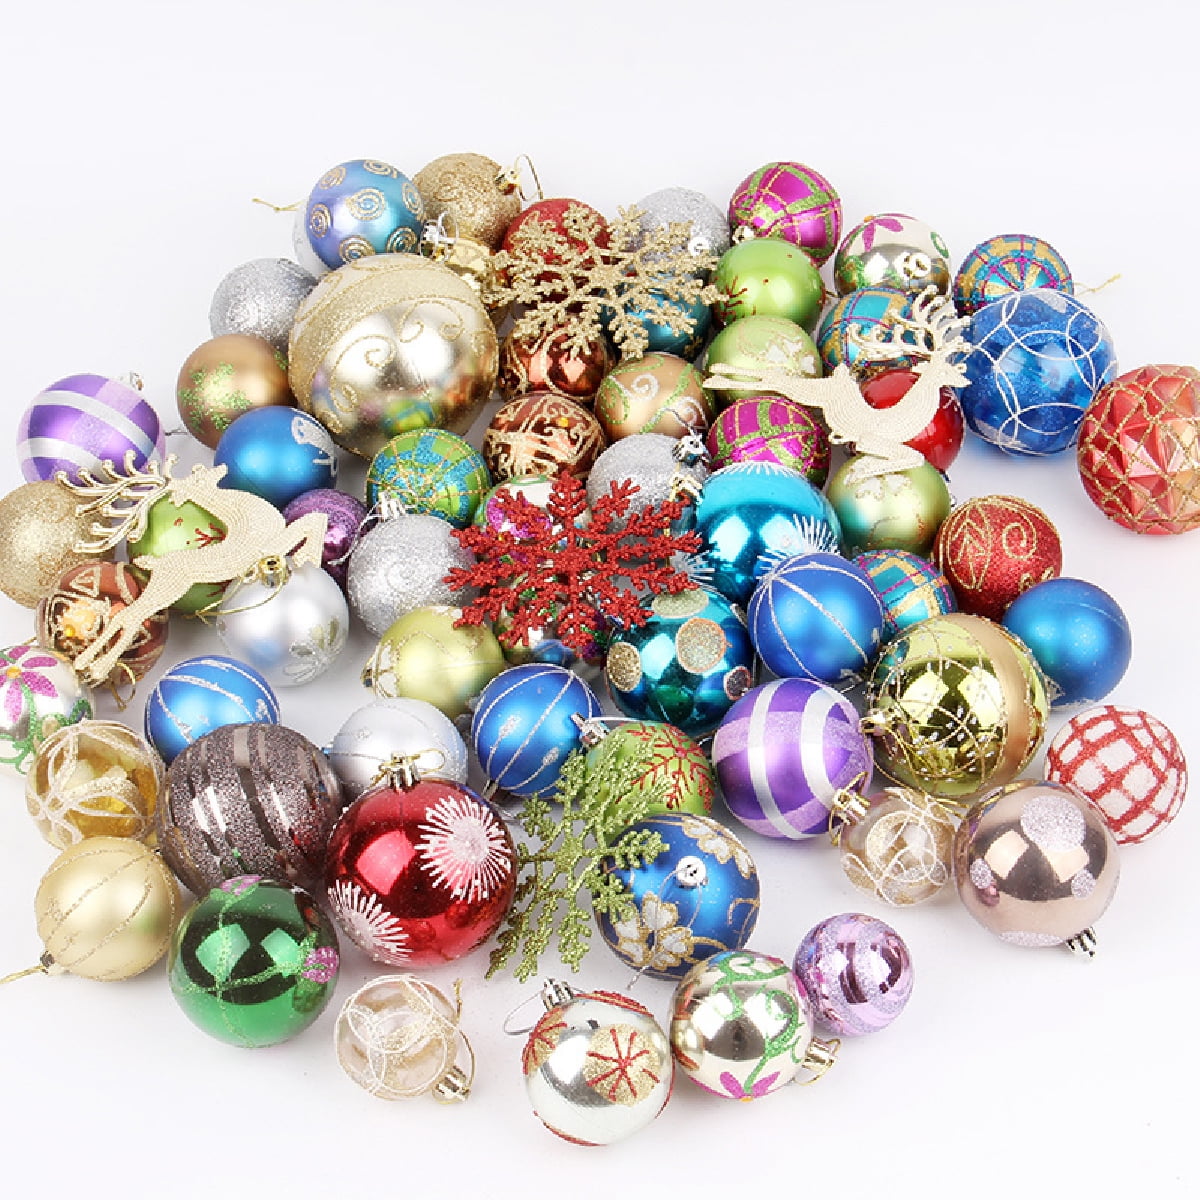 Handmade christmas balls ornaments set Multicolor decorative balls christmas tree ornaments for holiday decor hanging decorations 1SET=4PCS